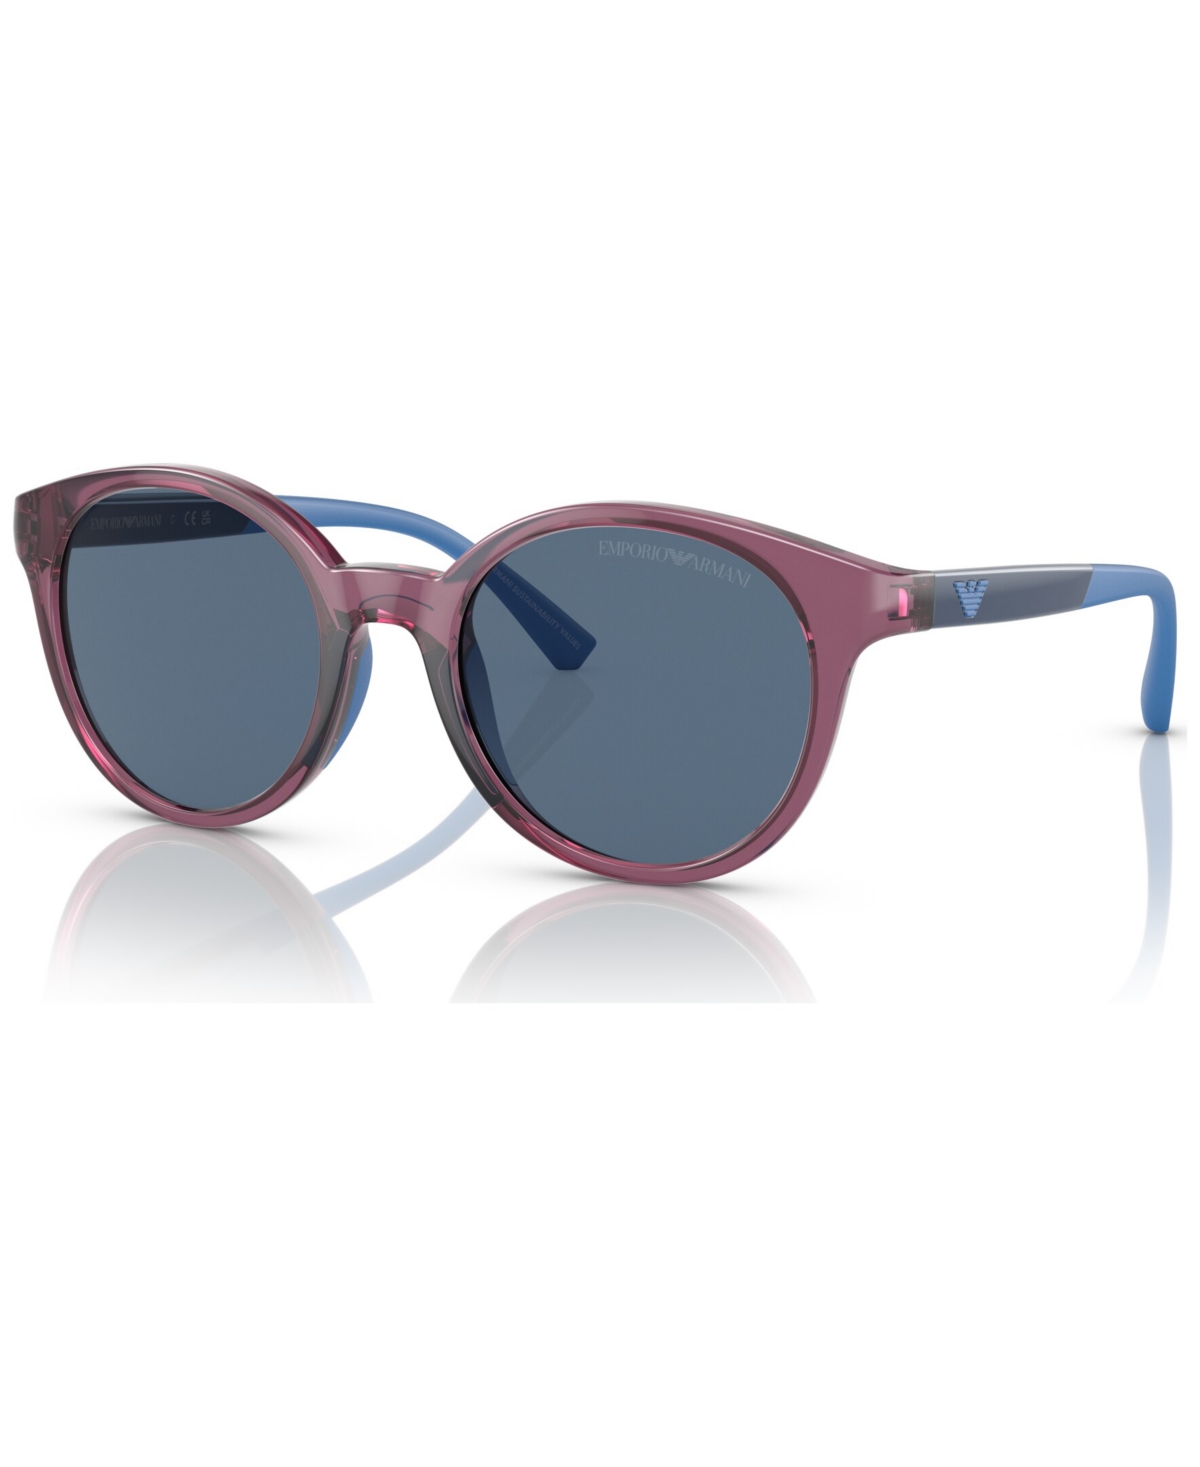 Emporio Armani Kids Sunglasses, Ek4185 In Shiny Pink